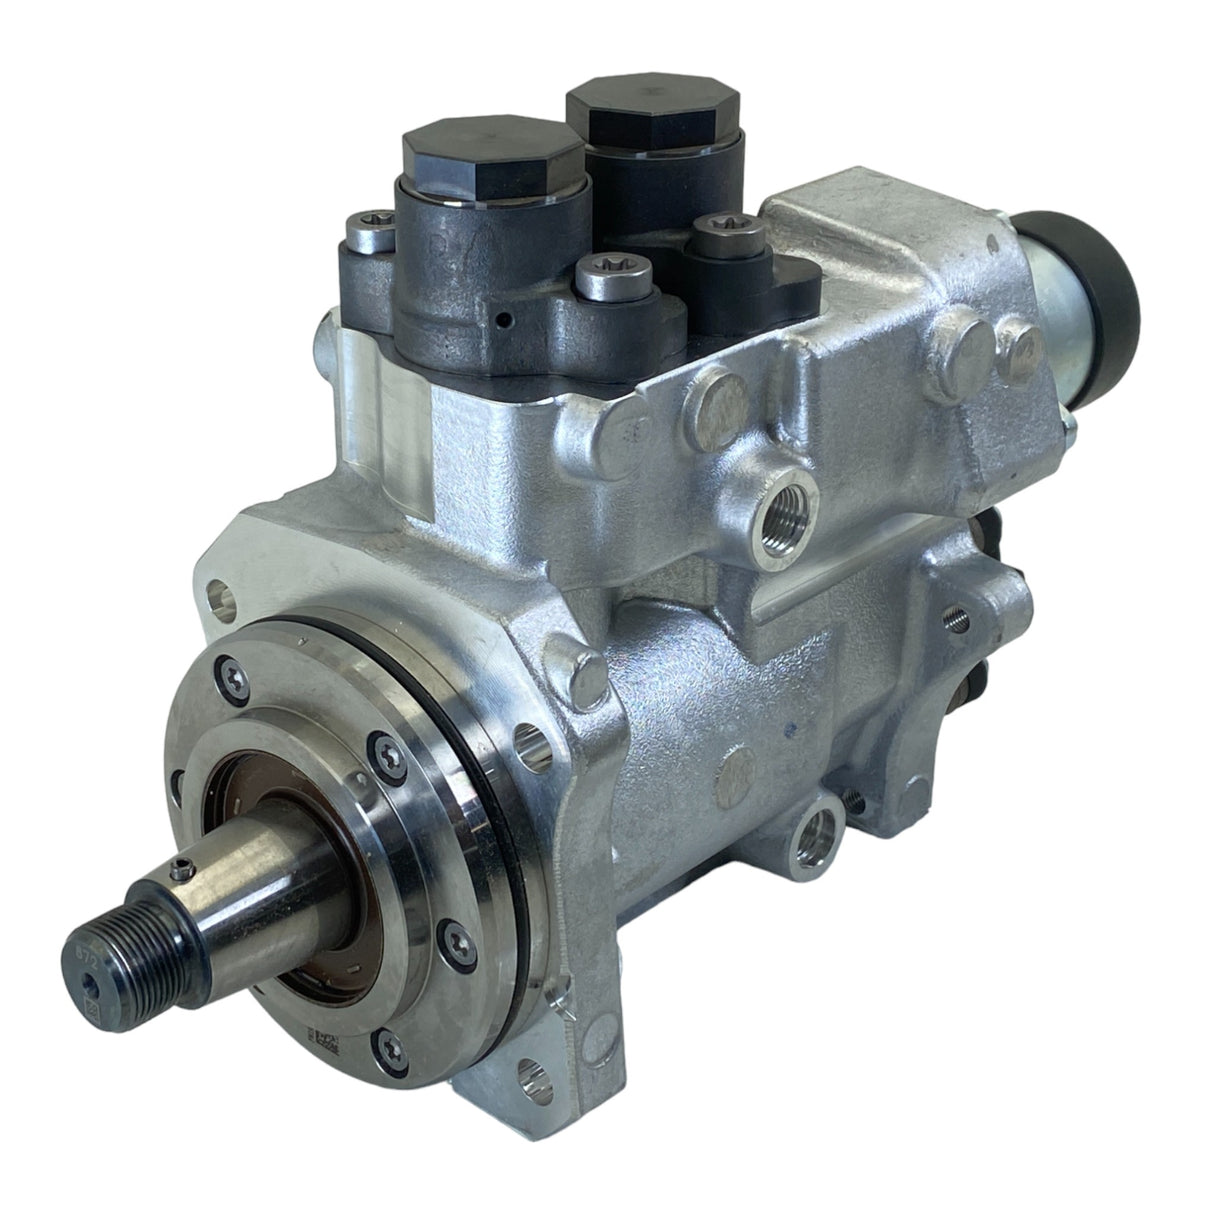 A4720902150 Genuine Detroit Diesel Fuel Injection Pump